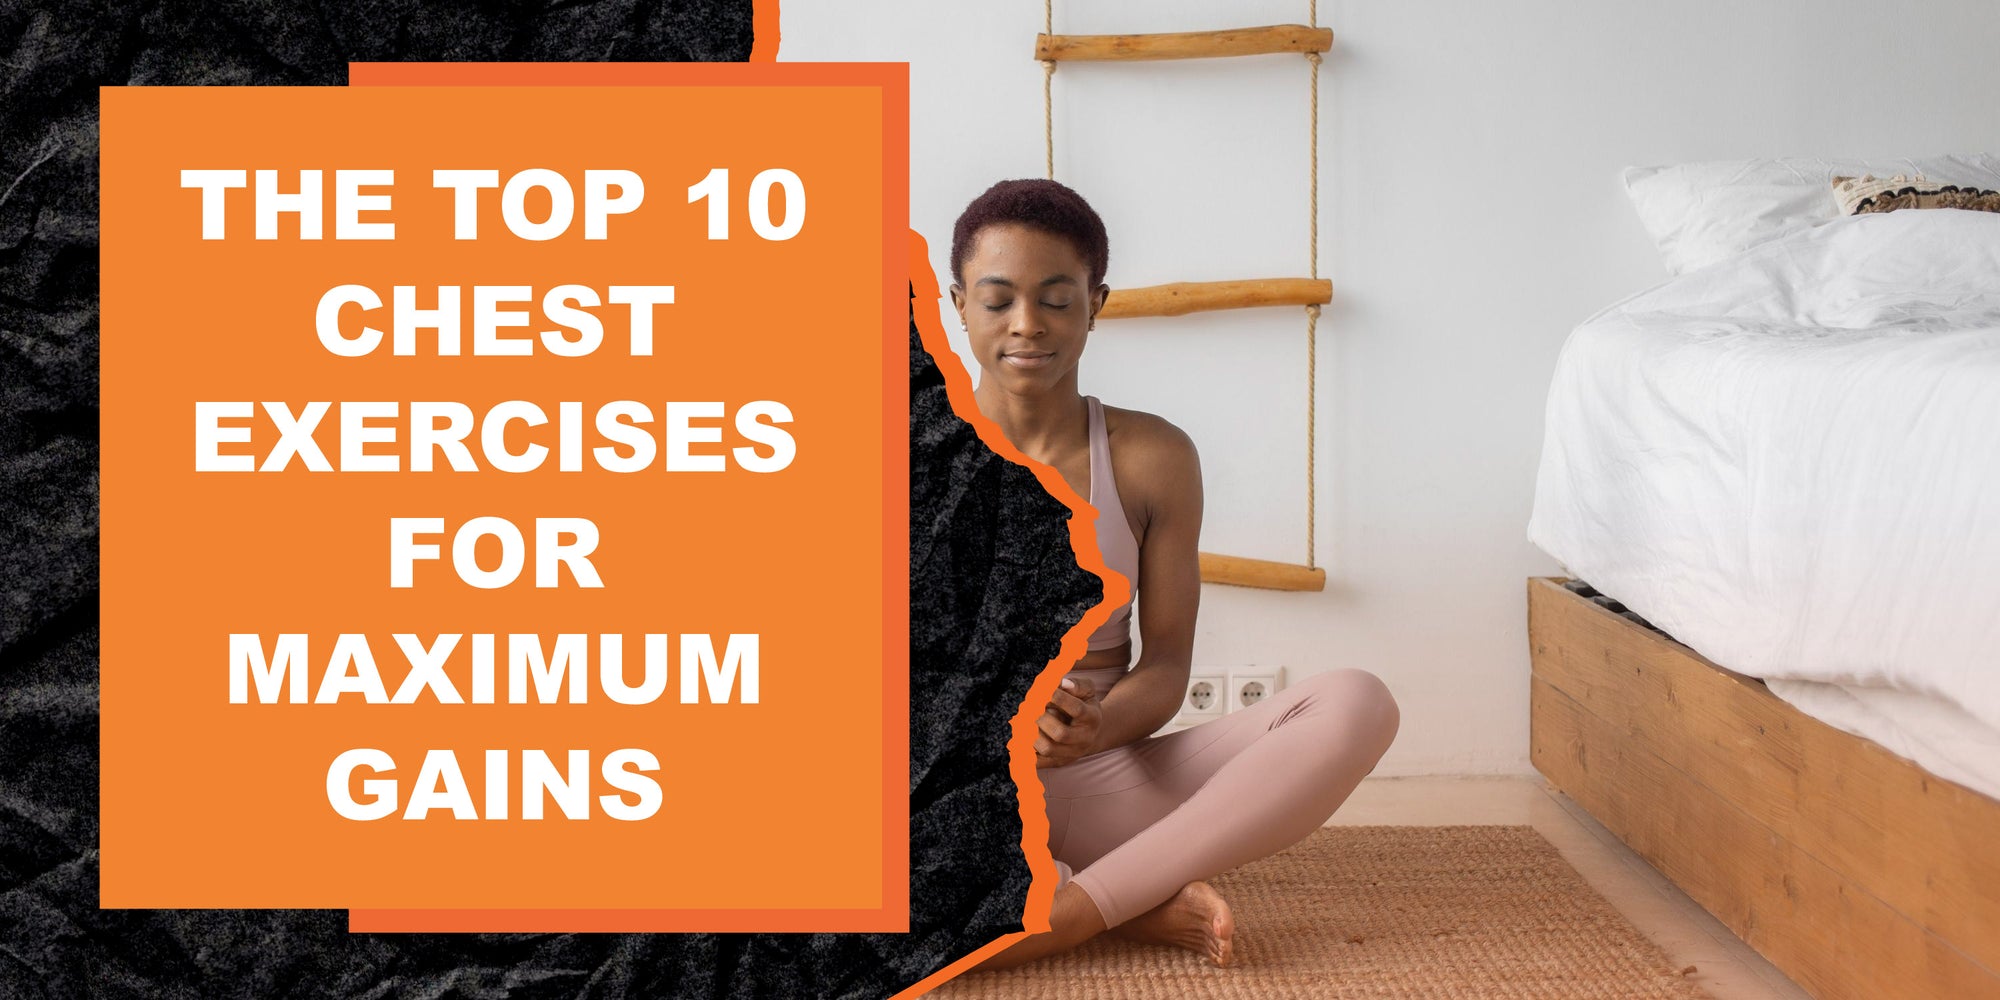 The Top 10 Chest Exercises for Maximum Gains